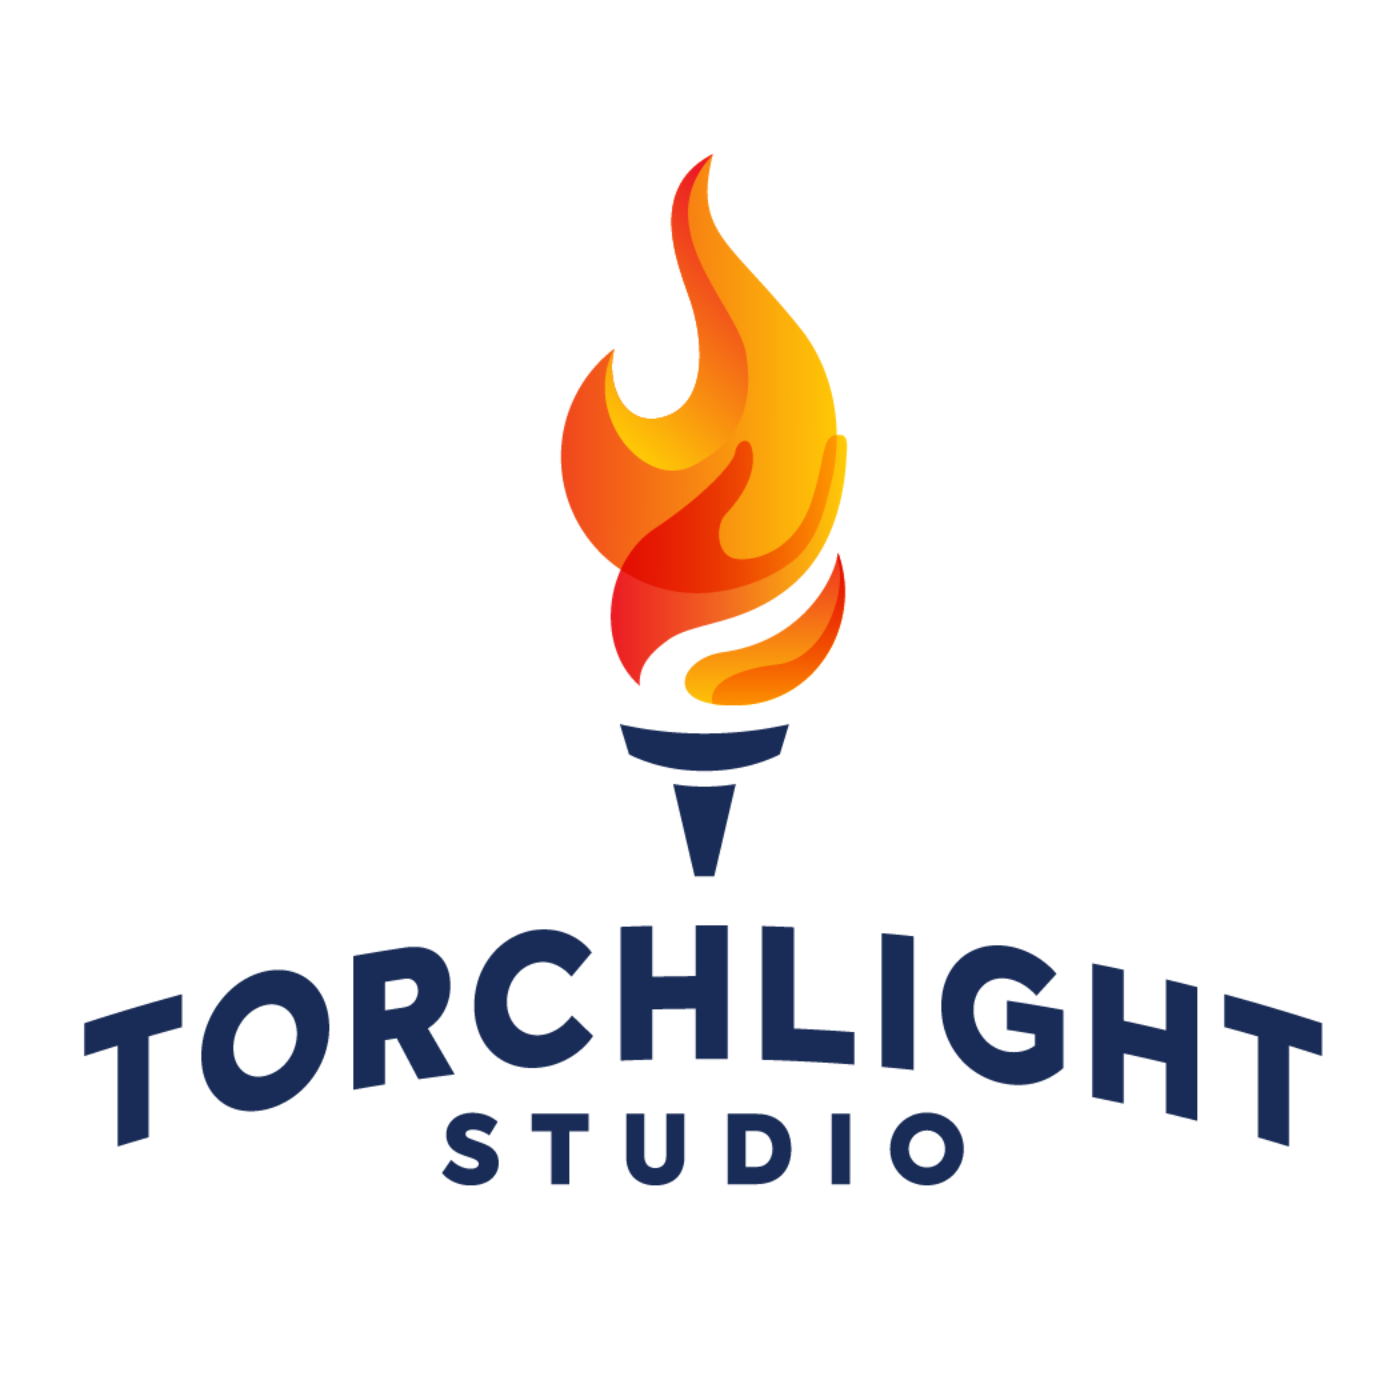 Episode 2: Torchlight Tales & Fiddles